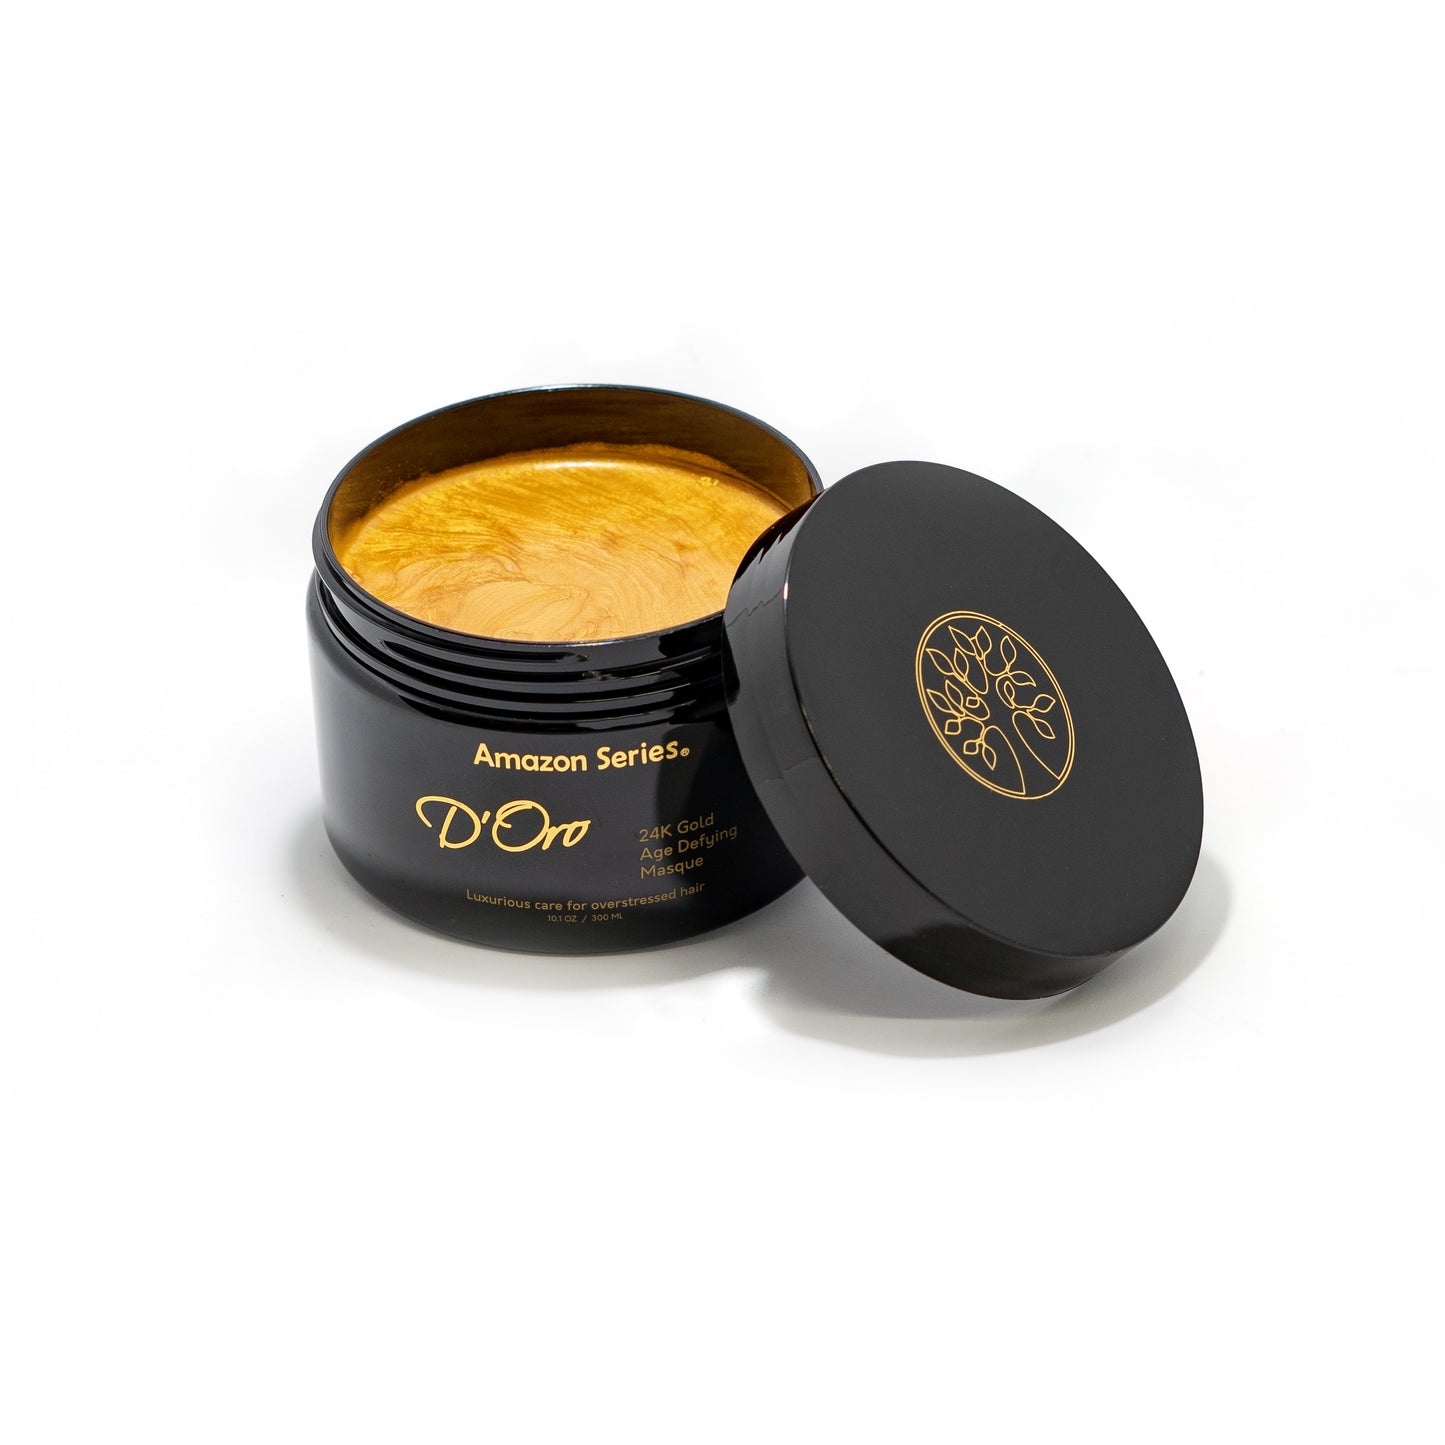 Amazon Series D'Oro 24K Gold Hair Masque